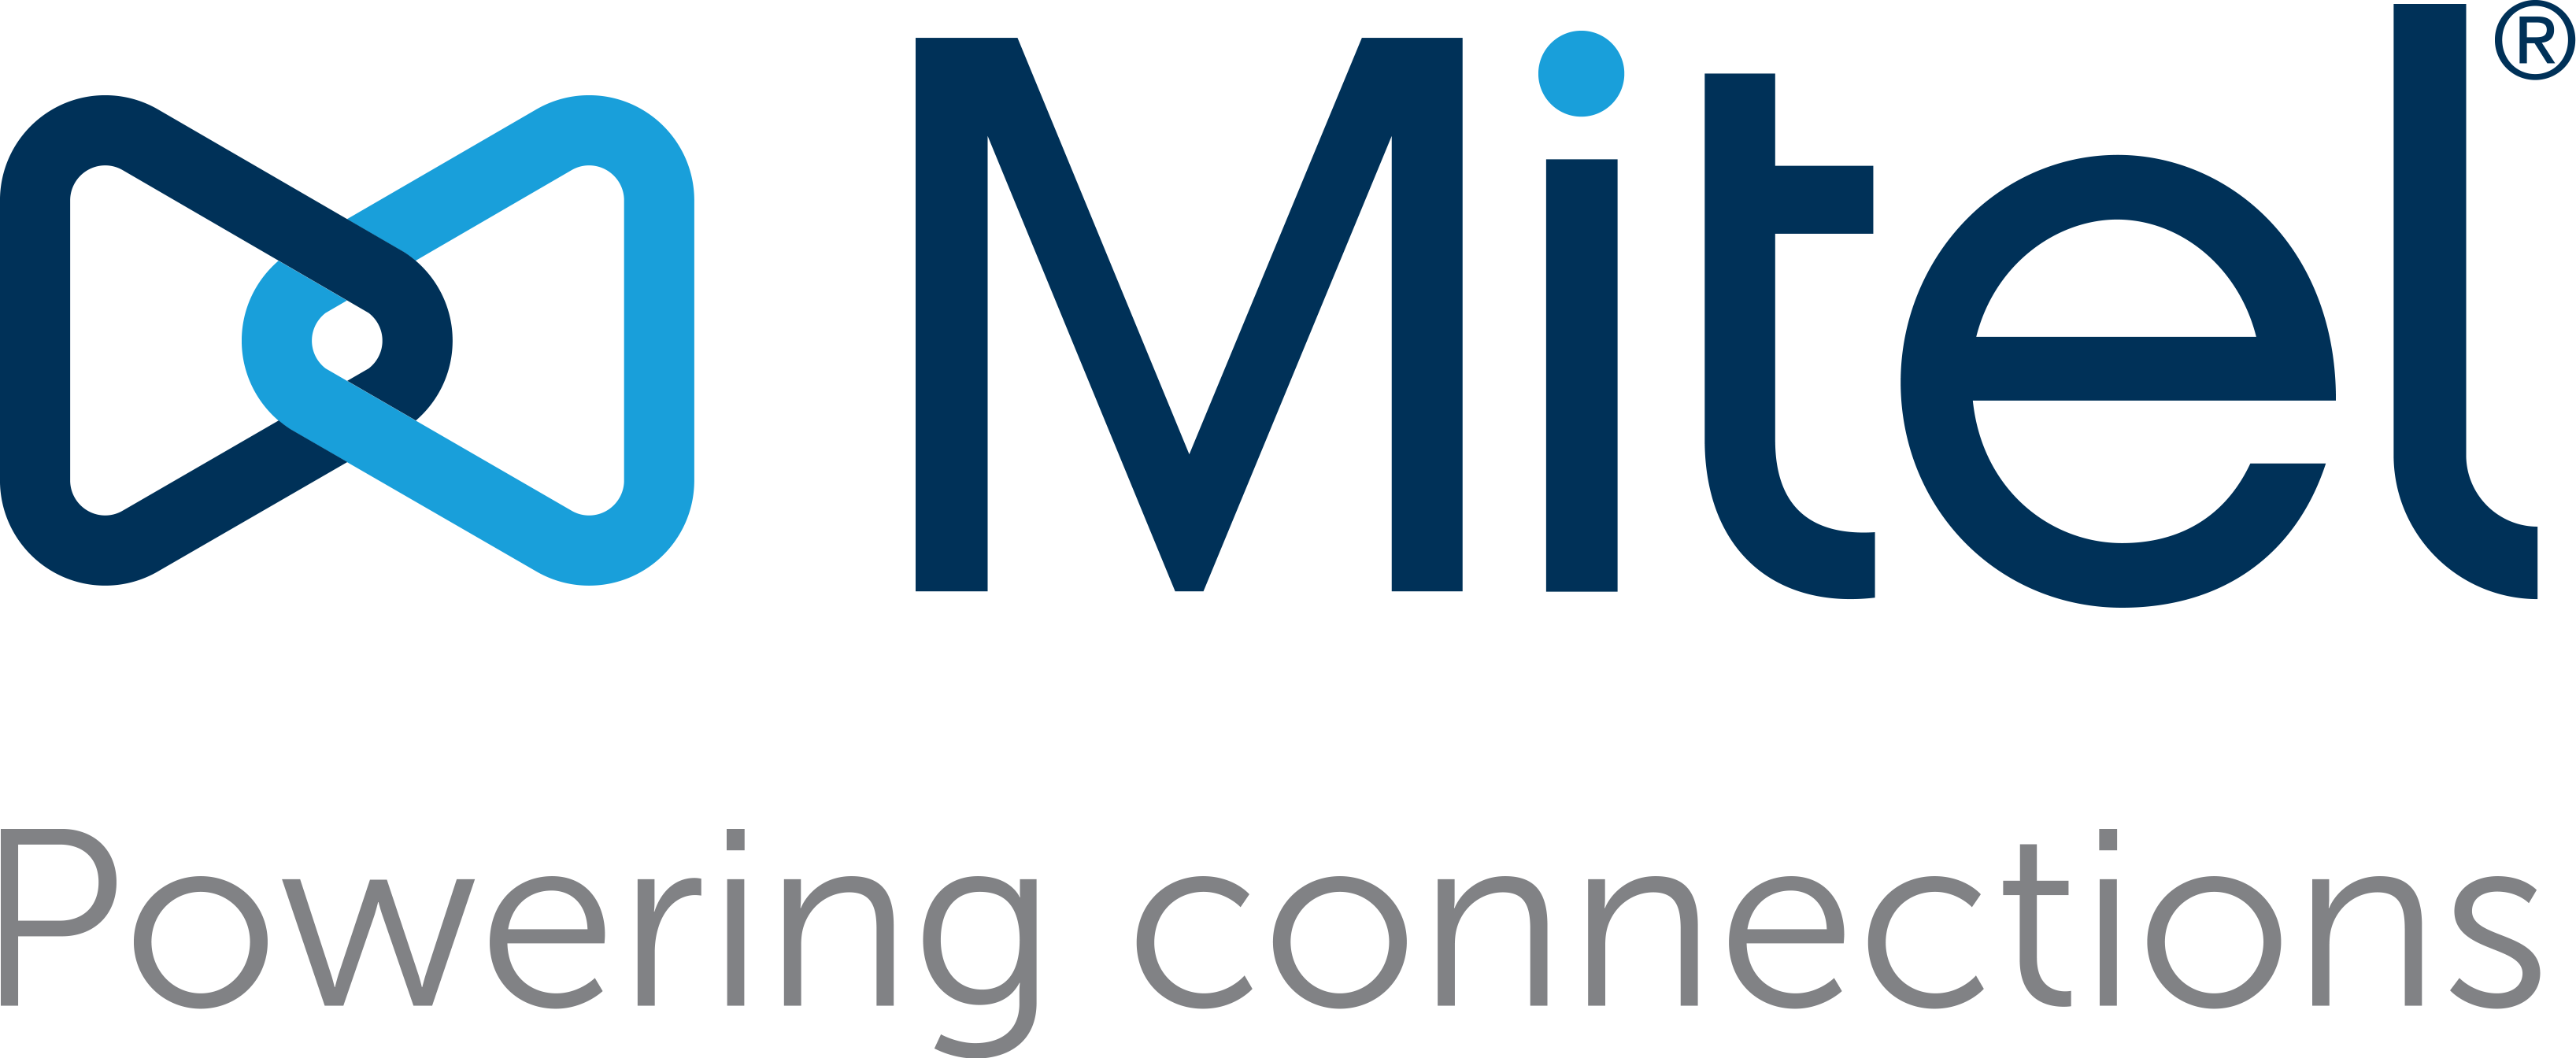 mitel-logo-full-color-tagline-eps